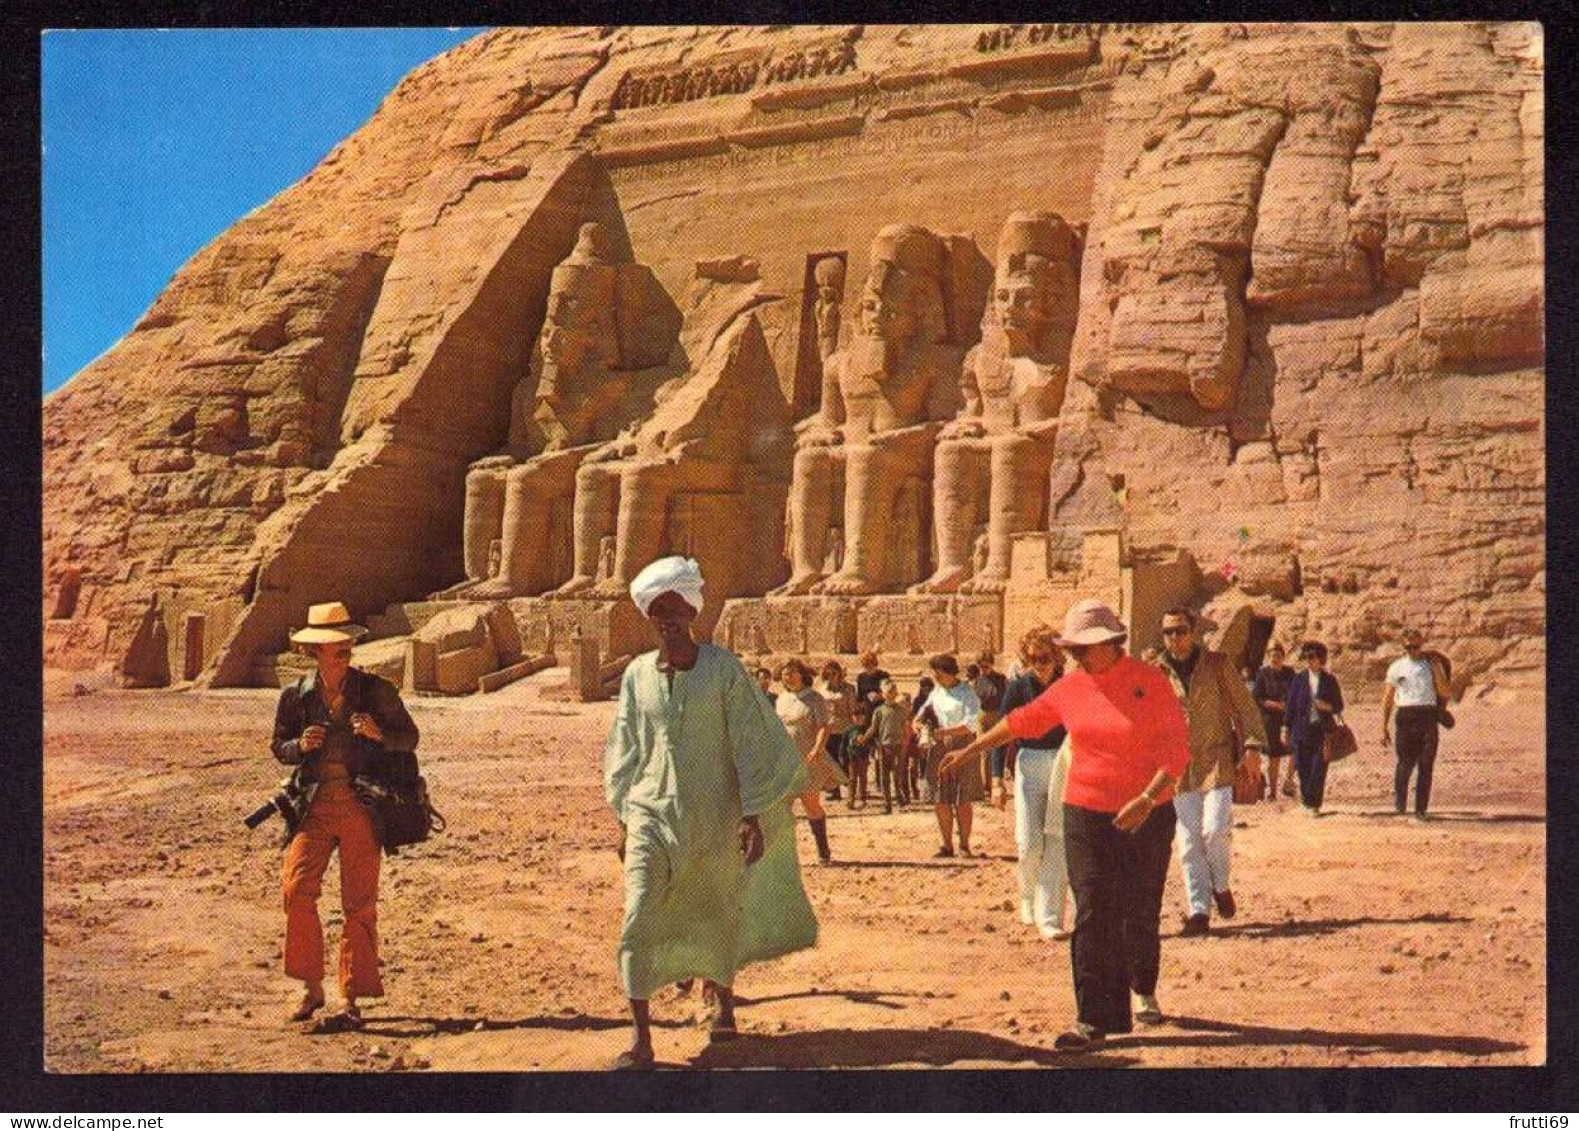 AK 200962 EGYPT - Abou Simbel Rock Temple Of Ramses II - Portail View Of The Gigantic Statues - Tempel Von Abu Simbel